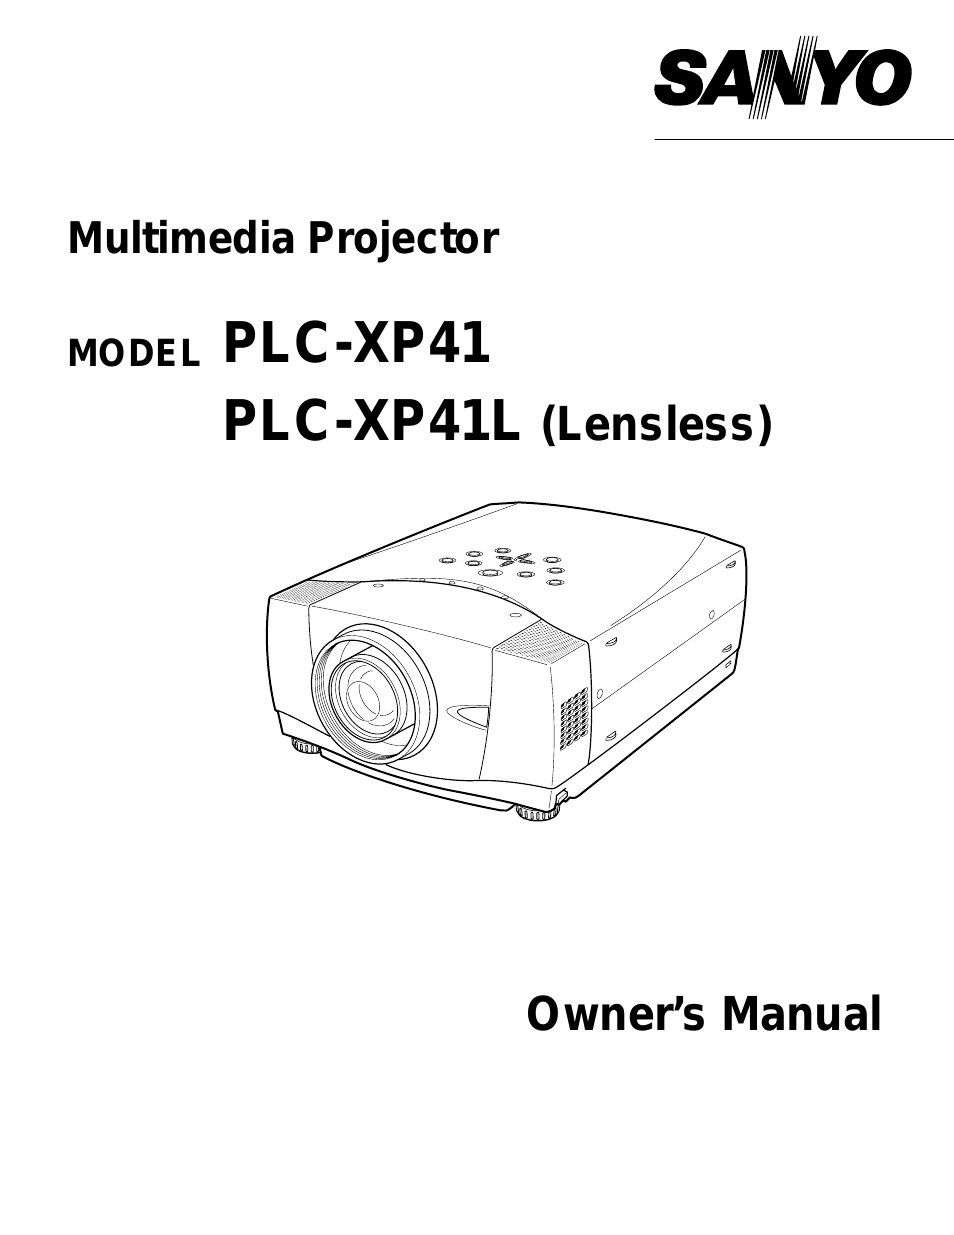 PLC-XP41L